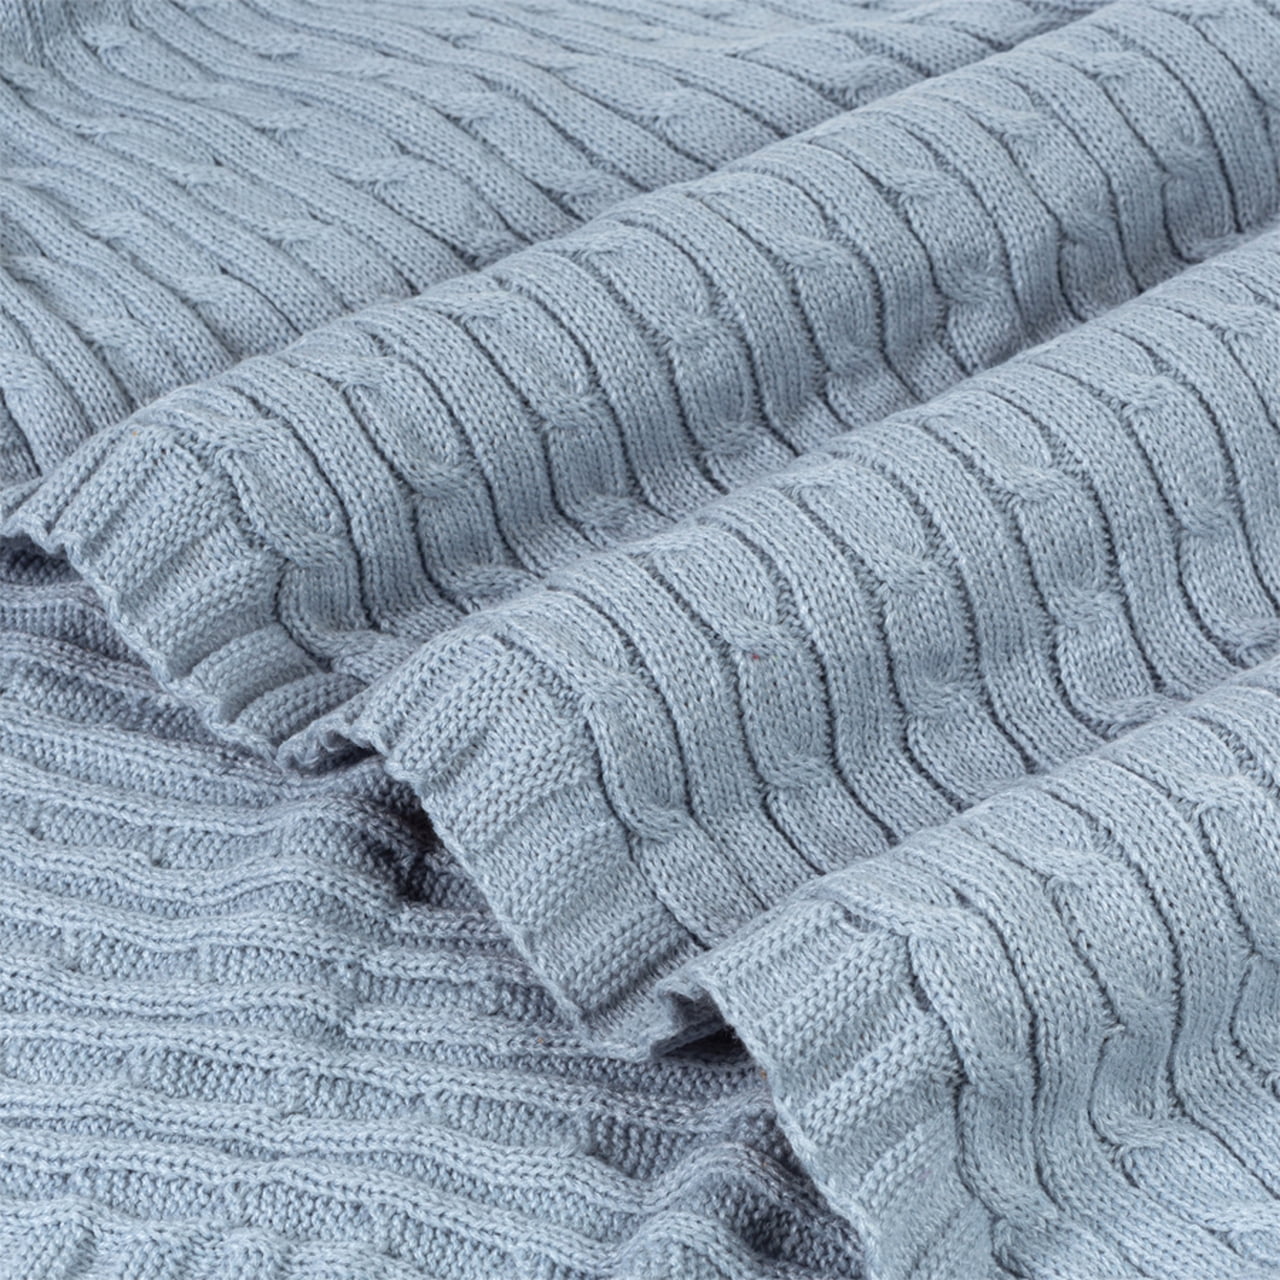 Blanket sizes and suggested yardage – LOOM KNIT